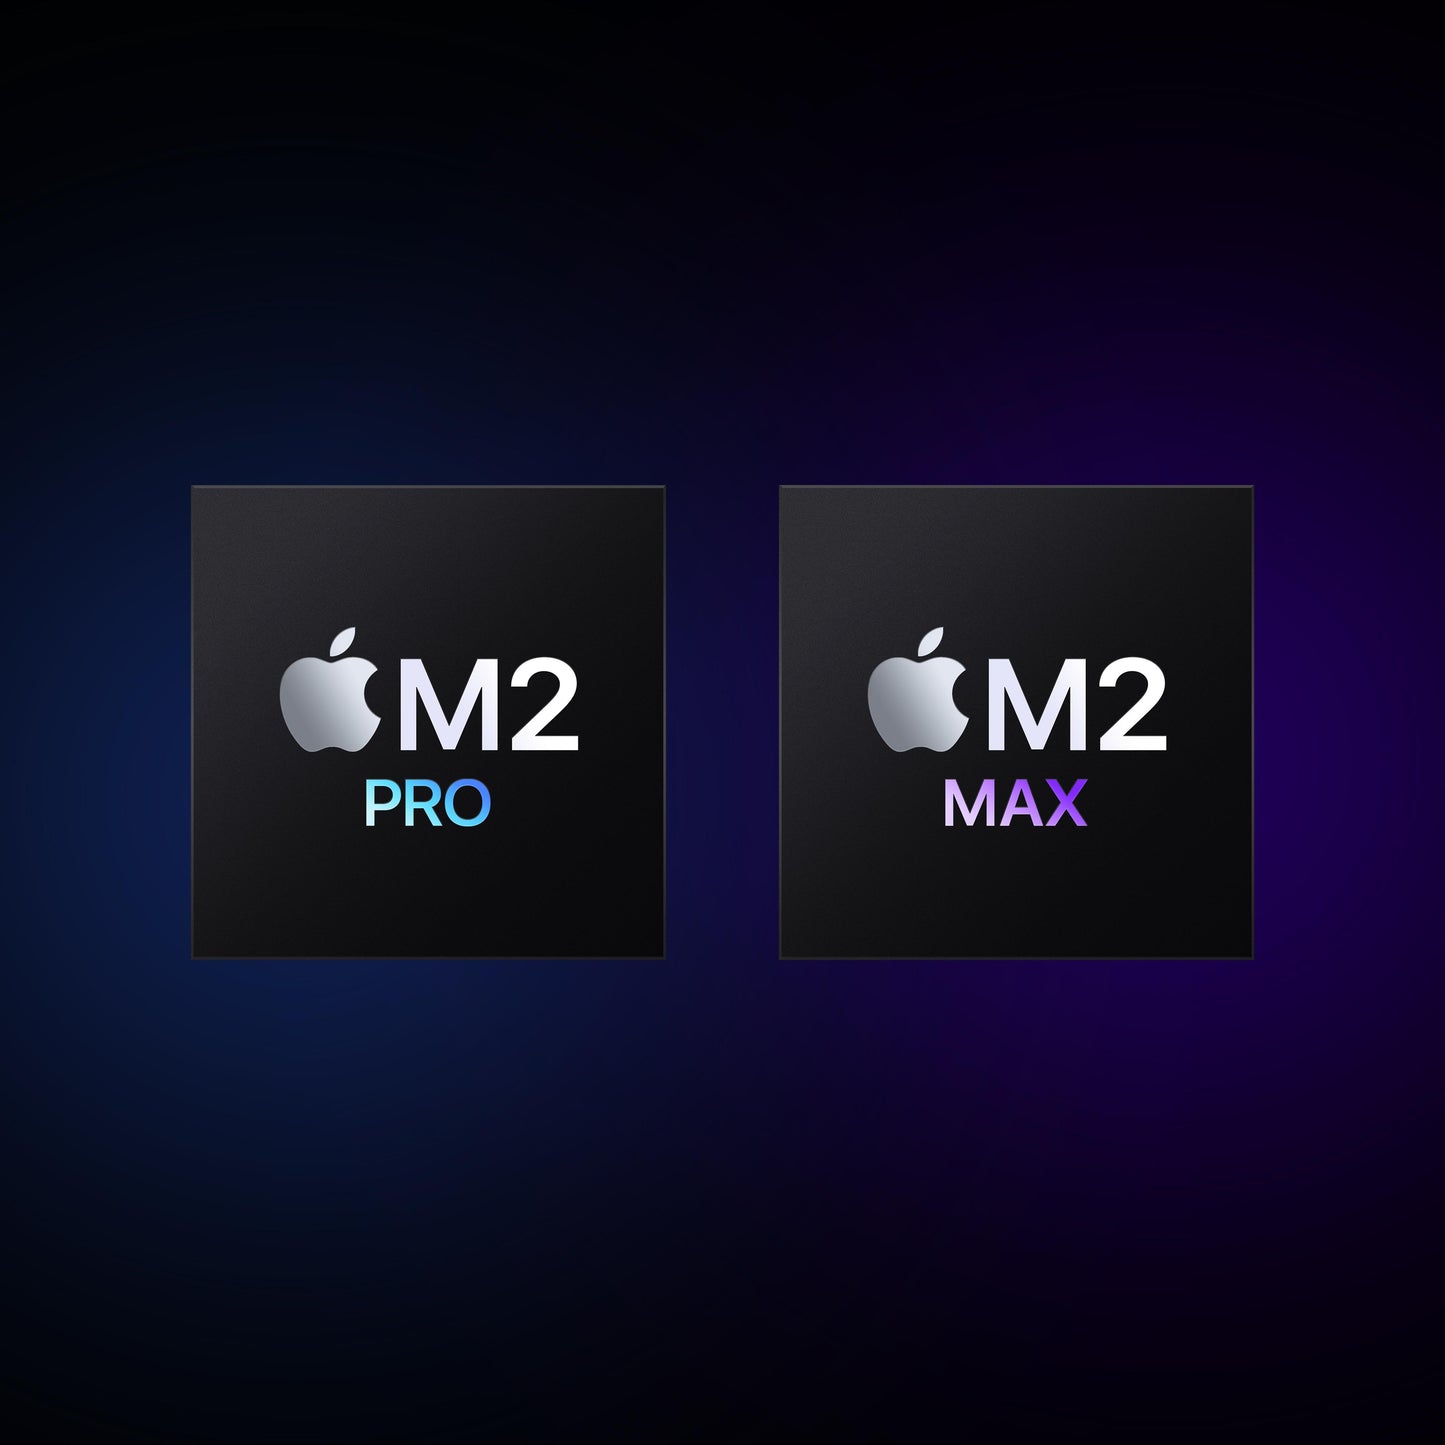 14-inch MacBook Pro: Apple M2 Pro chip with 12?core CPU and 19?core GPU, 1TB SSD - Silver